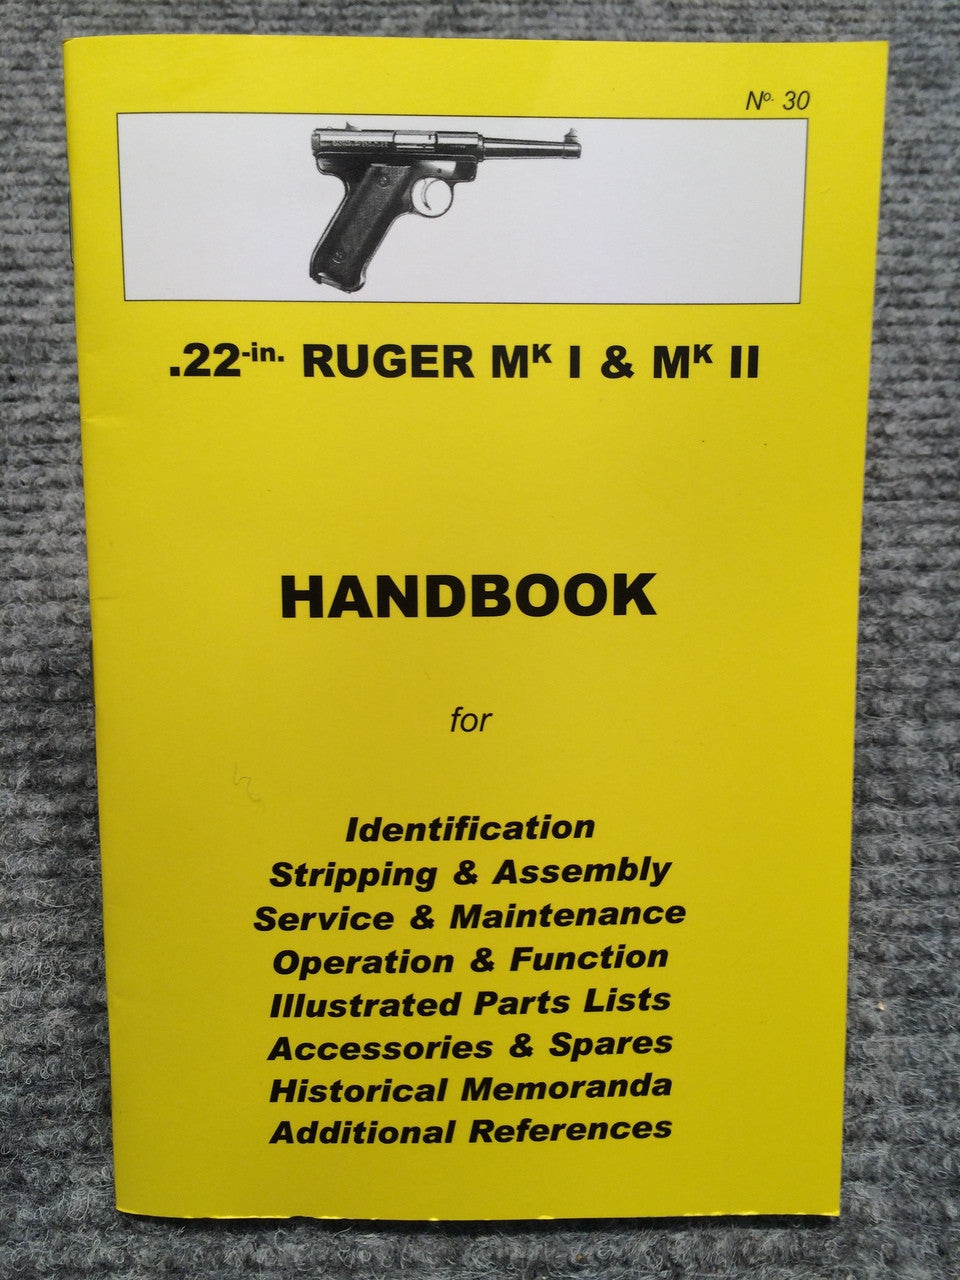 "22 Ruger MkI & II Handbook" No 30 by Ian Skennerton